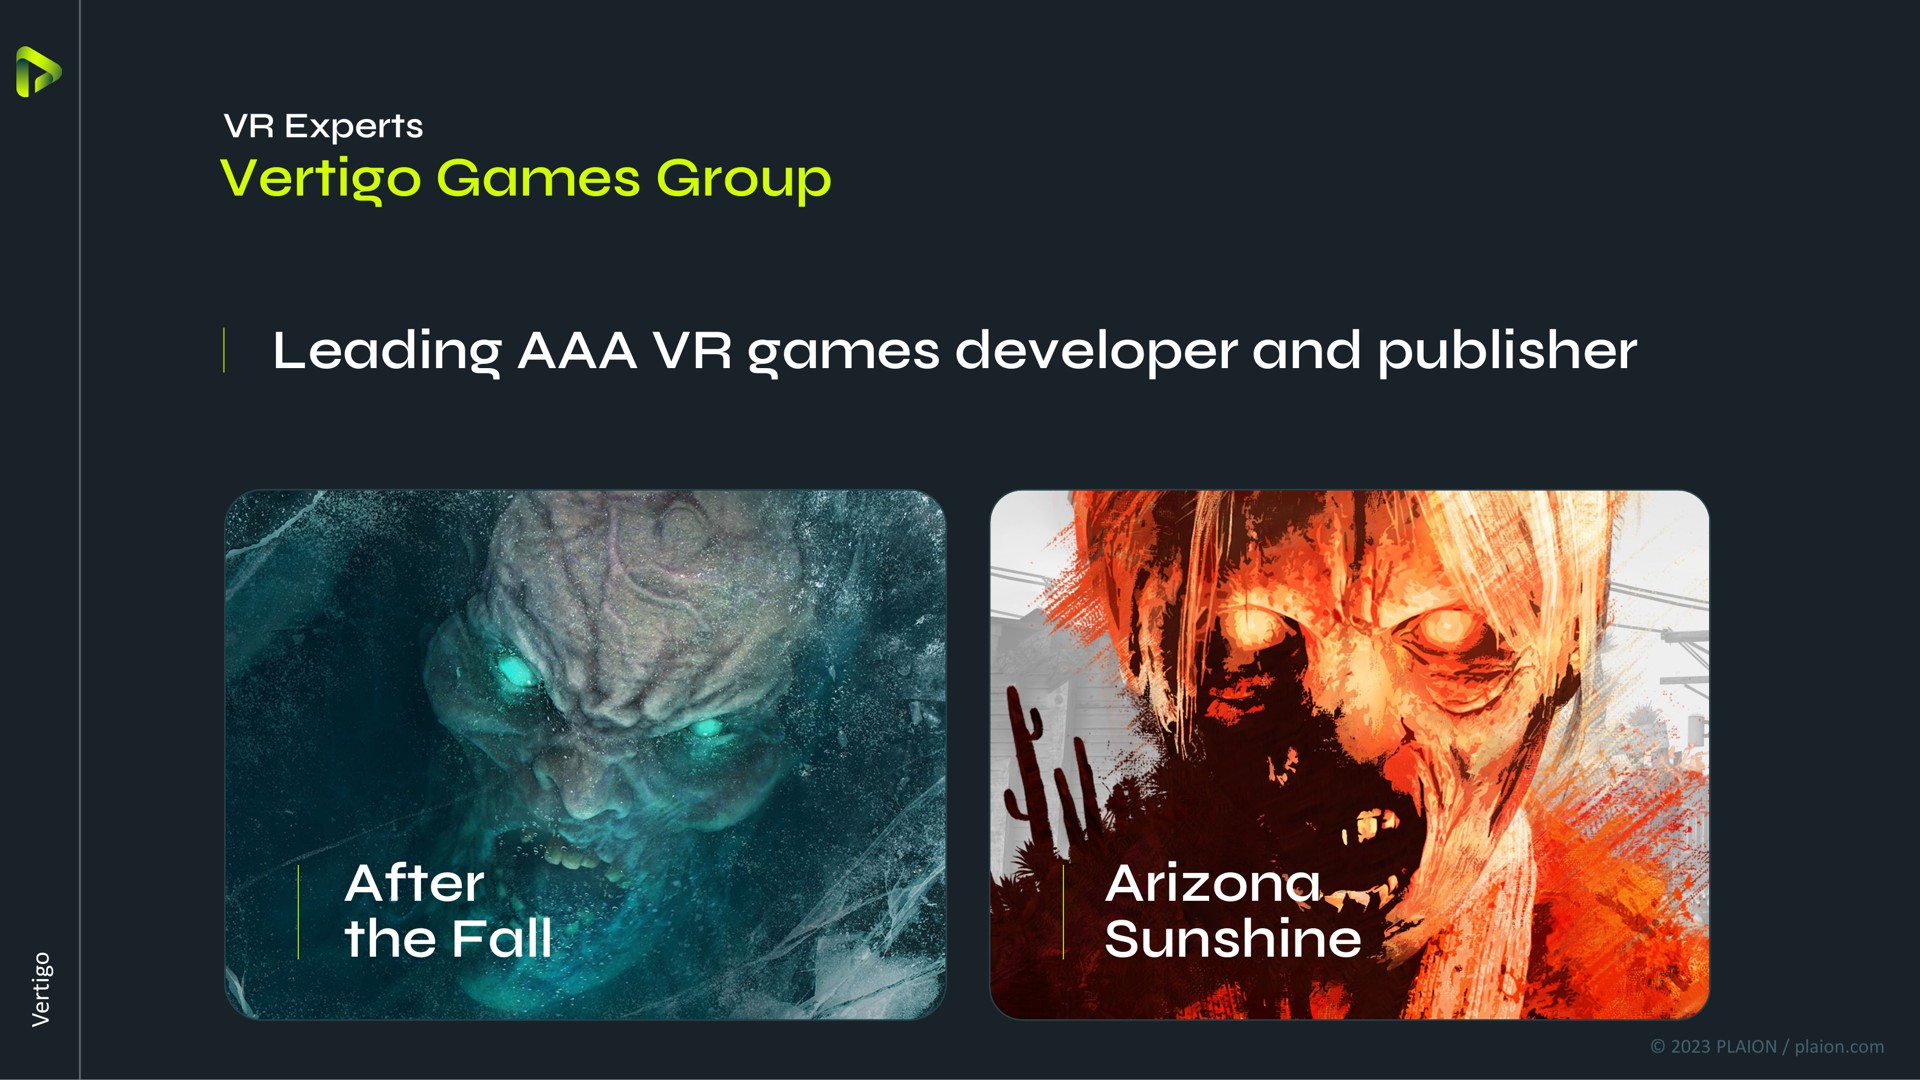 vertigo games group leading games developer and publisher after the fall sunshine | Embracer Group